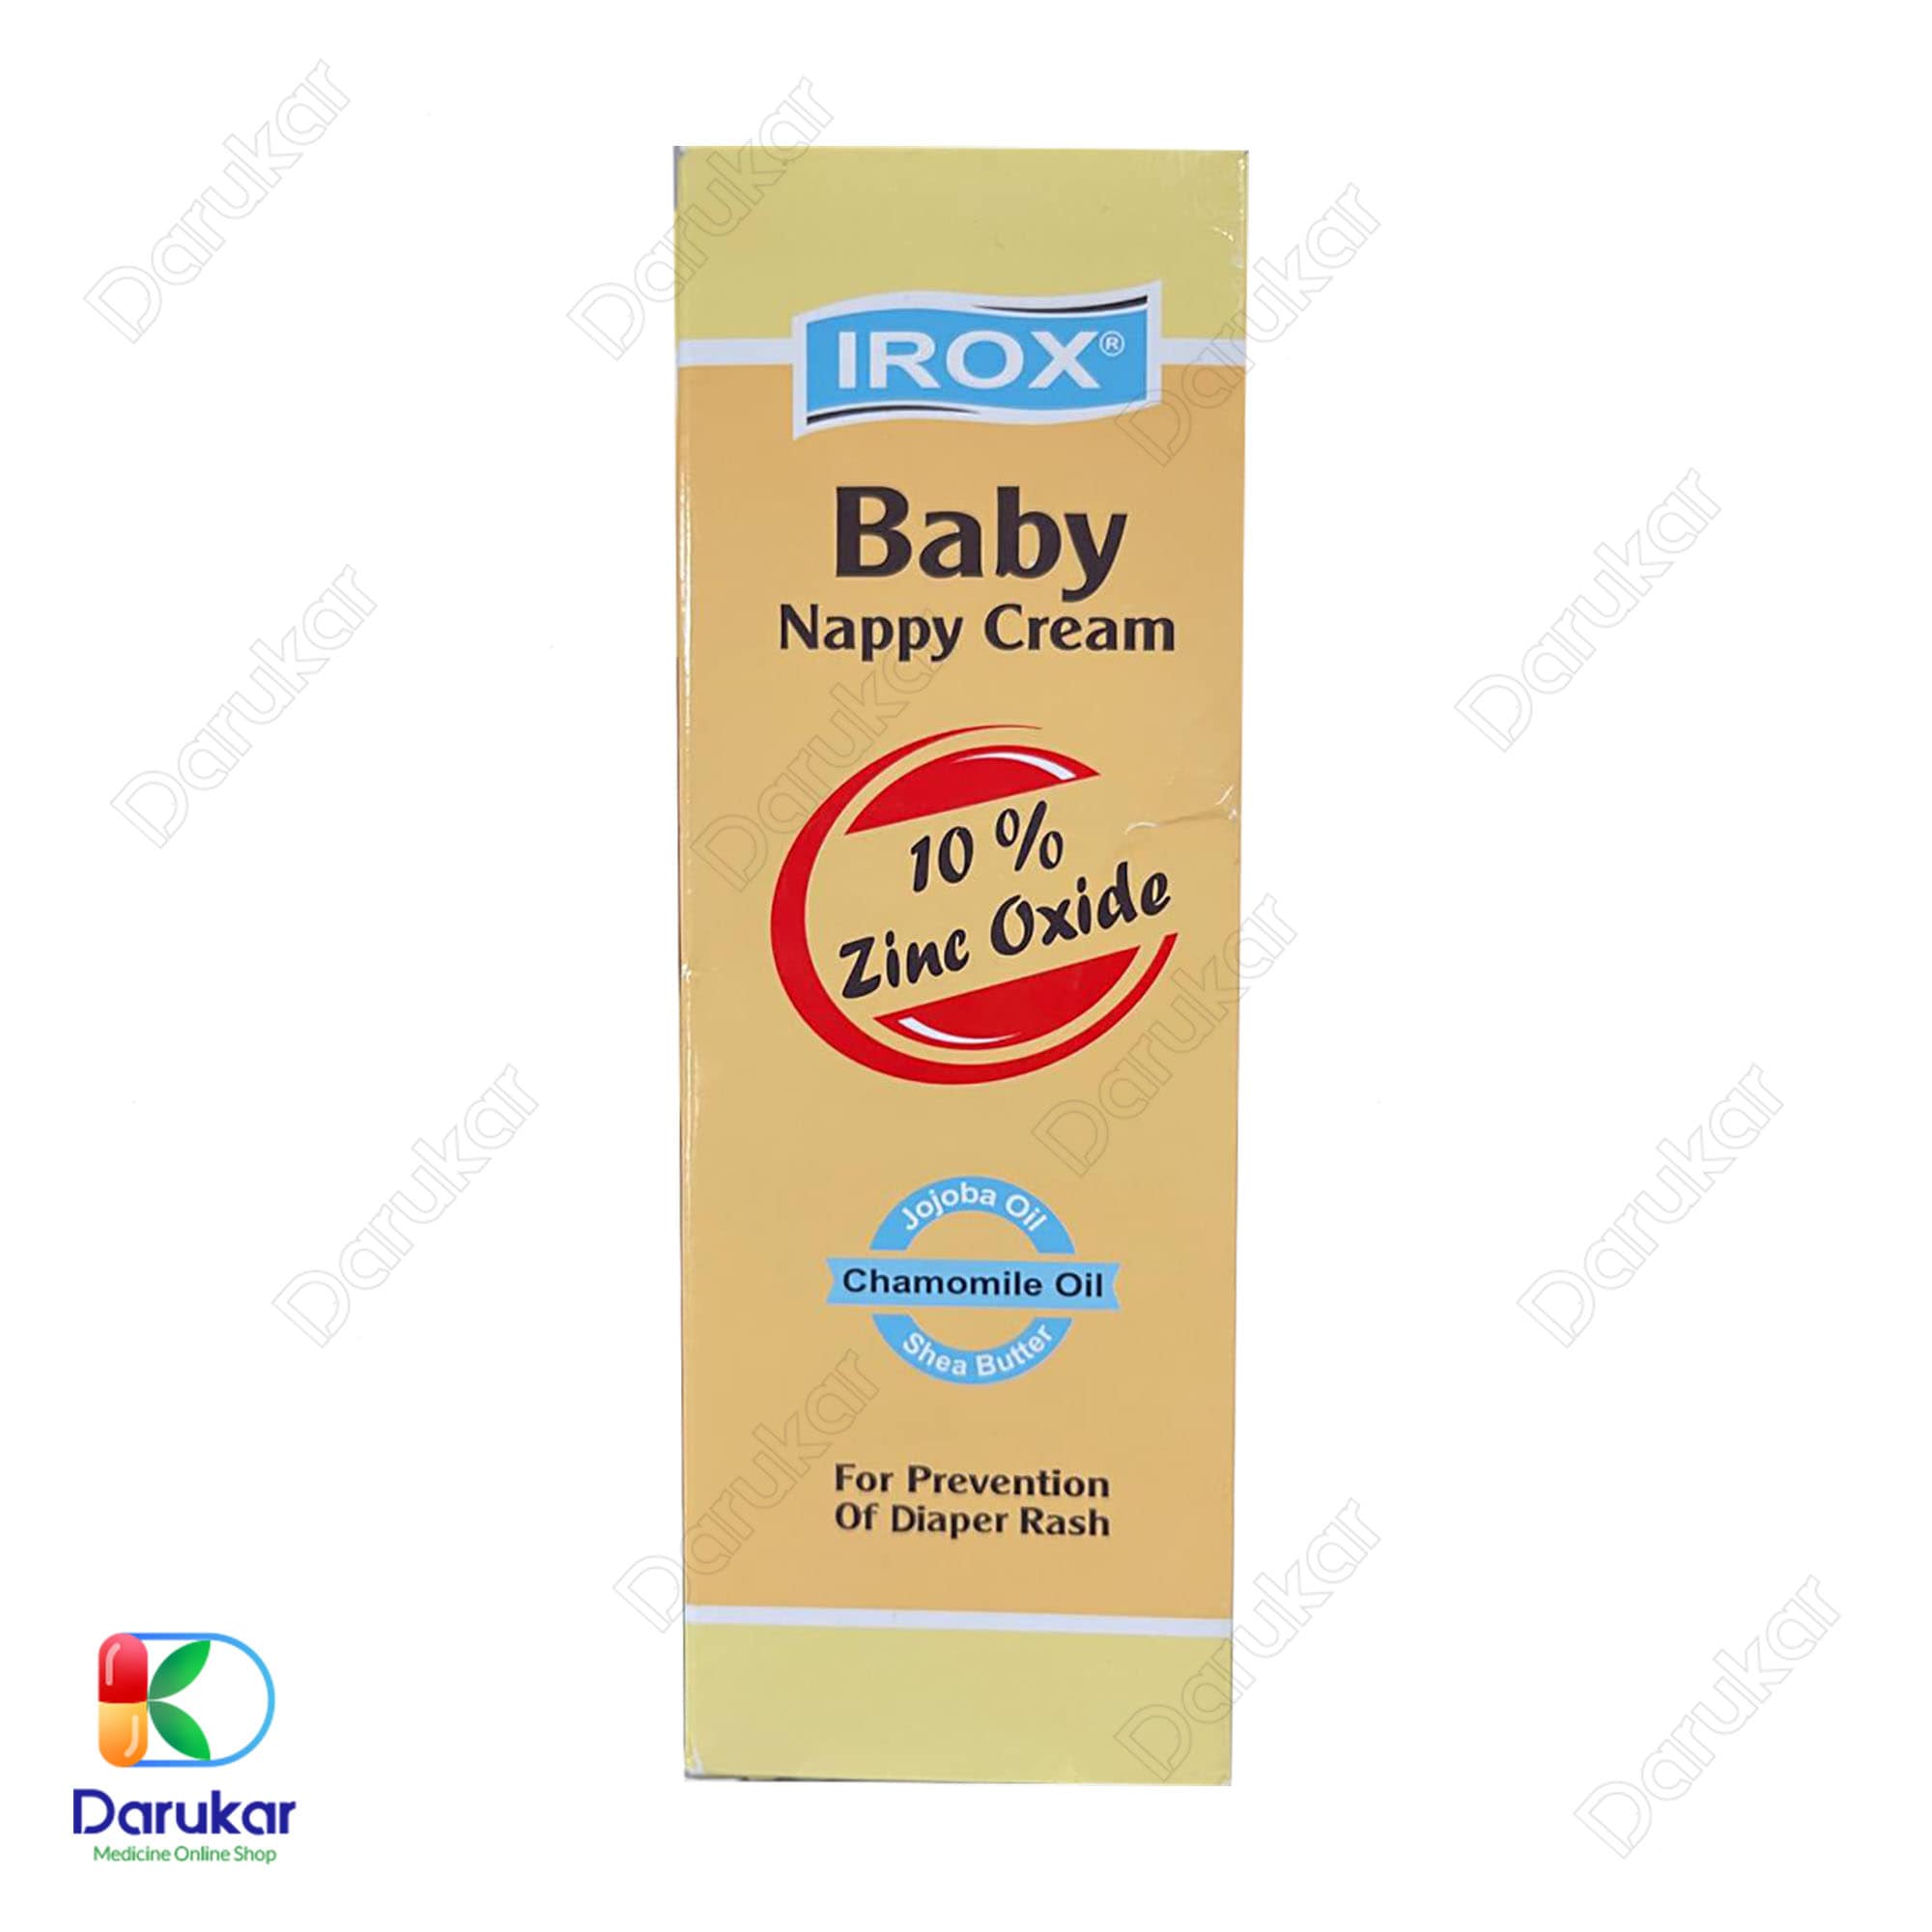 irox baby nappy cream 10 zink oxide 2